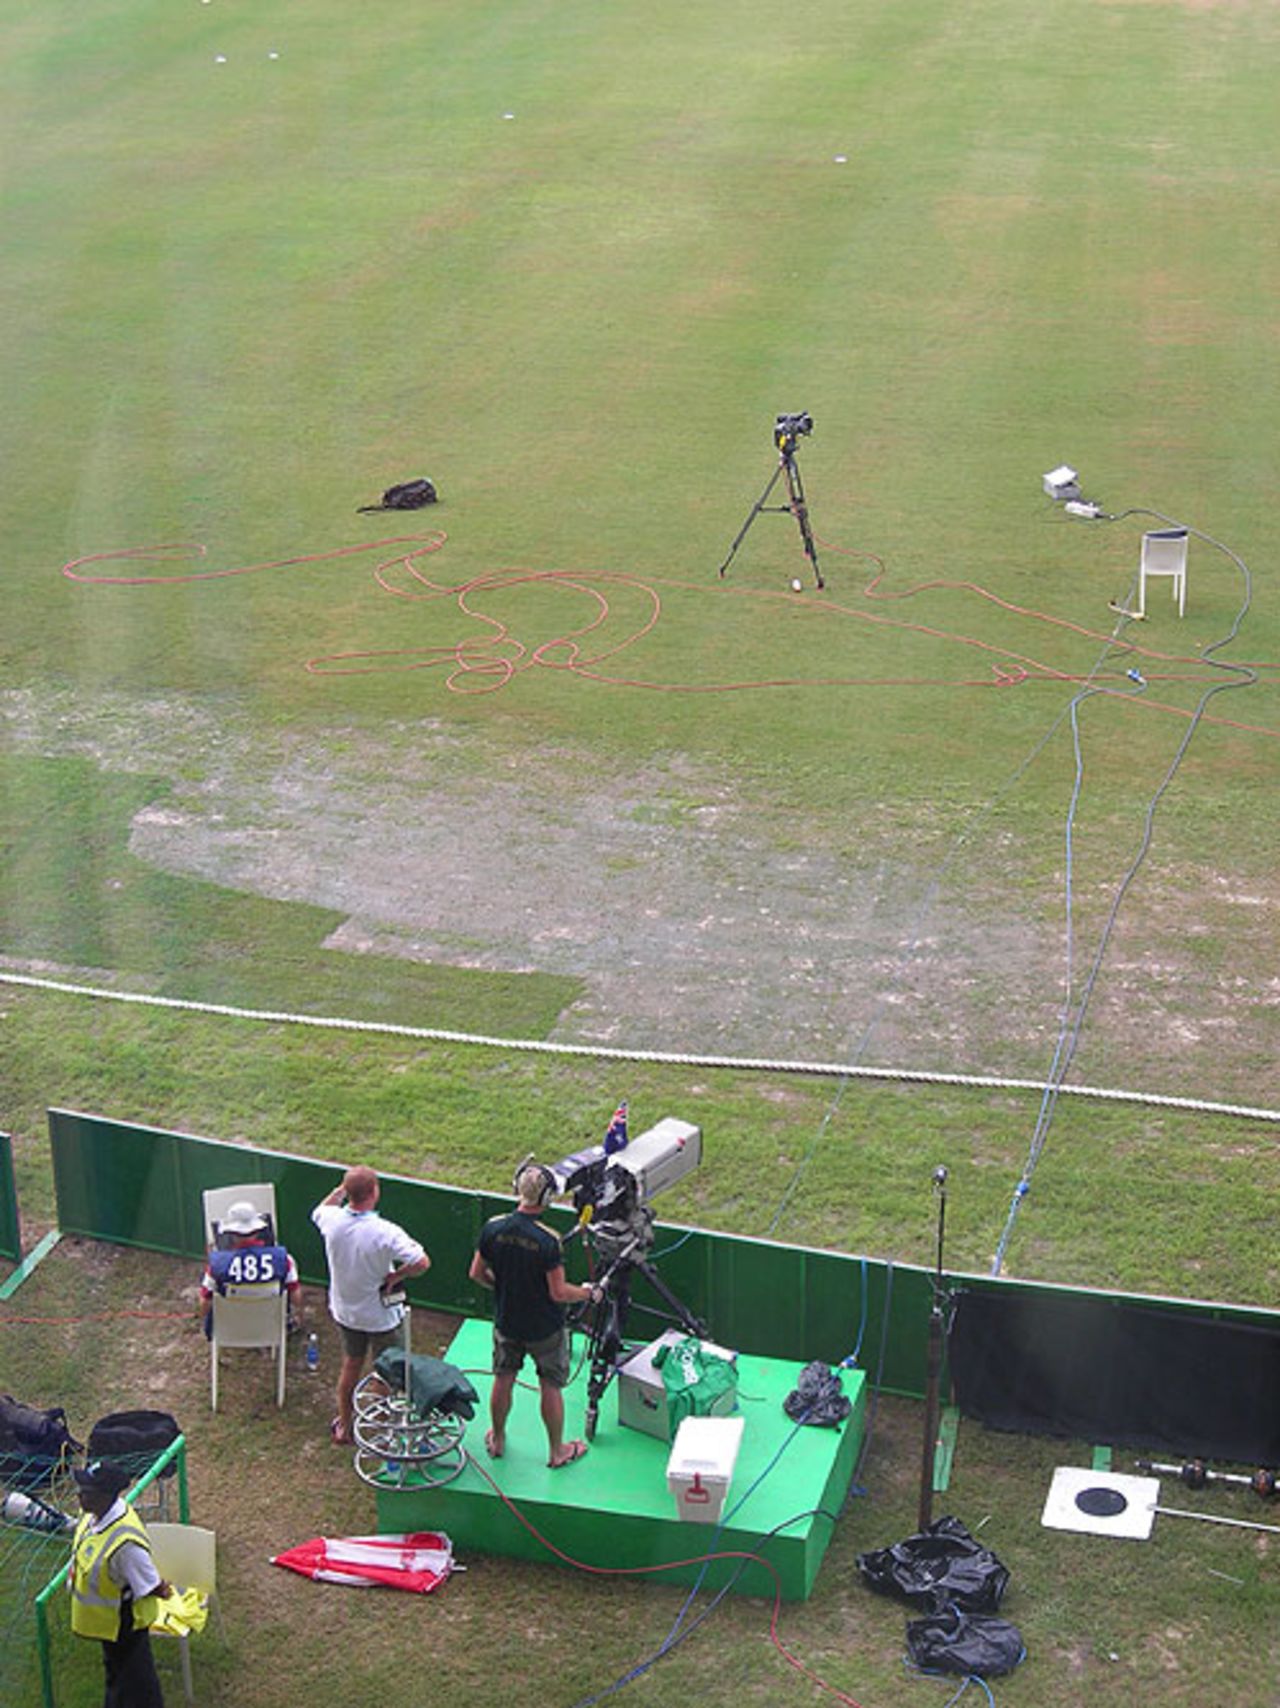 One of two big quagmires on the boundary's edge that delayed the start, 29th Match, Super Eights: Australia v Bangladesh, Sir Vivian Richards Stadium, North Sound, Antigua, March 31, 2007